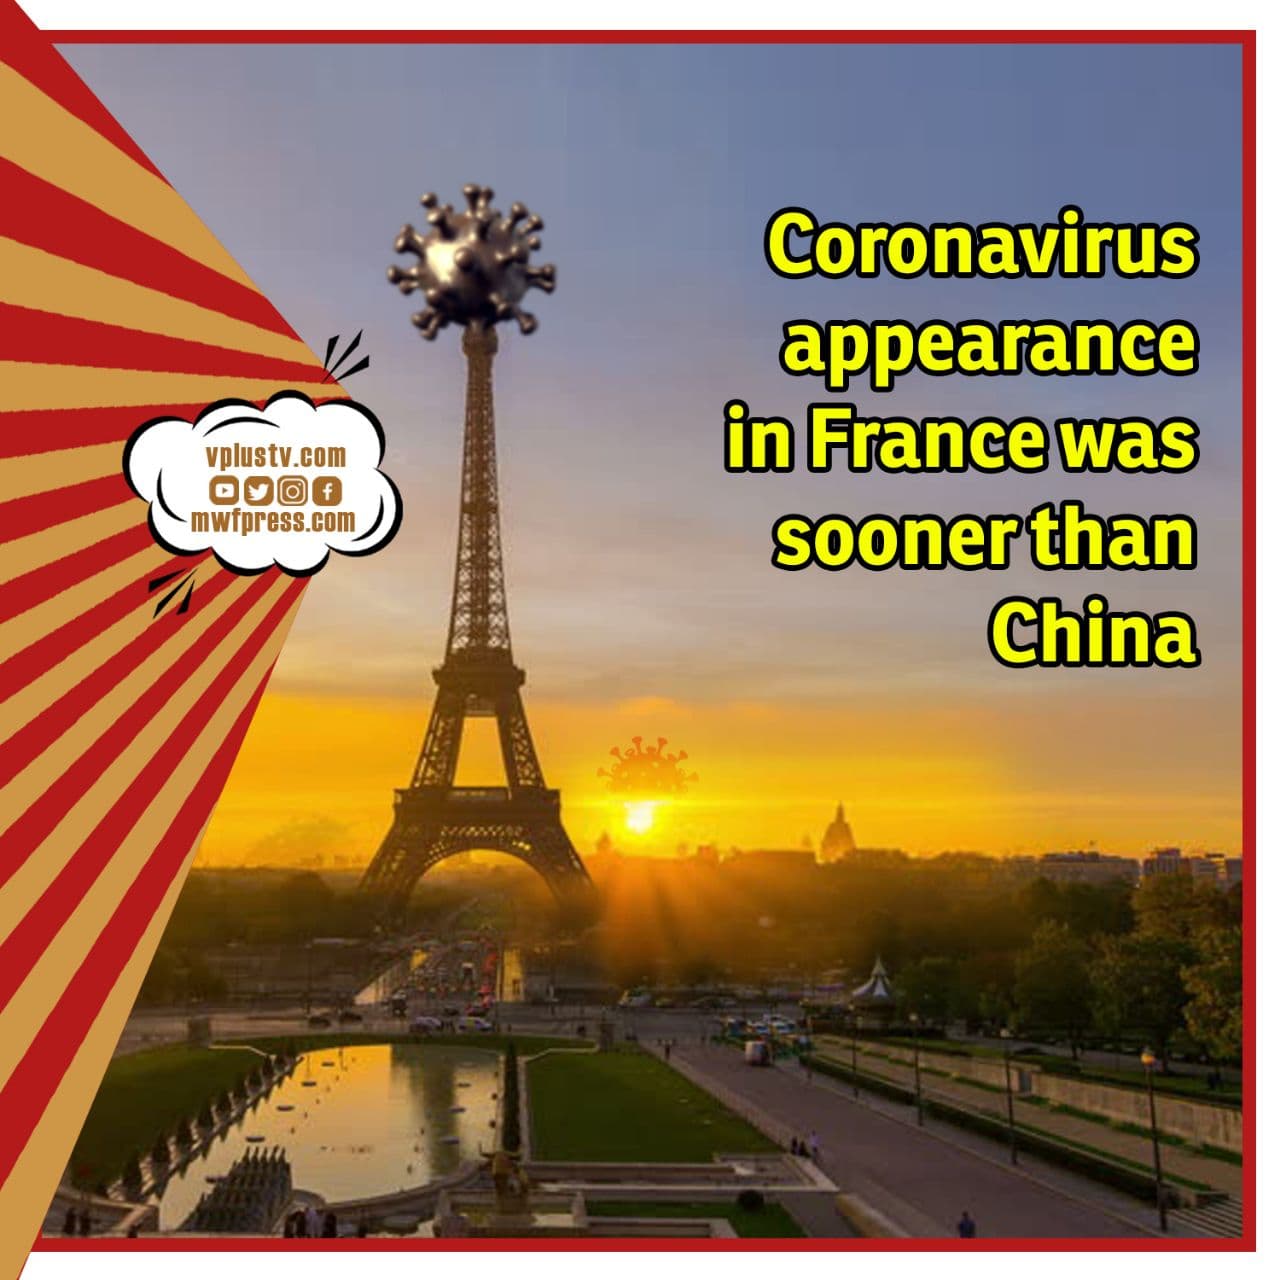 Coronavirus appearance in France was sooner than China